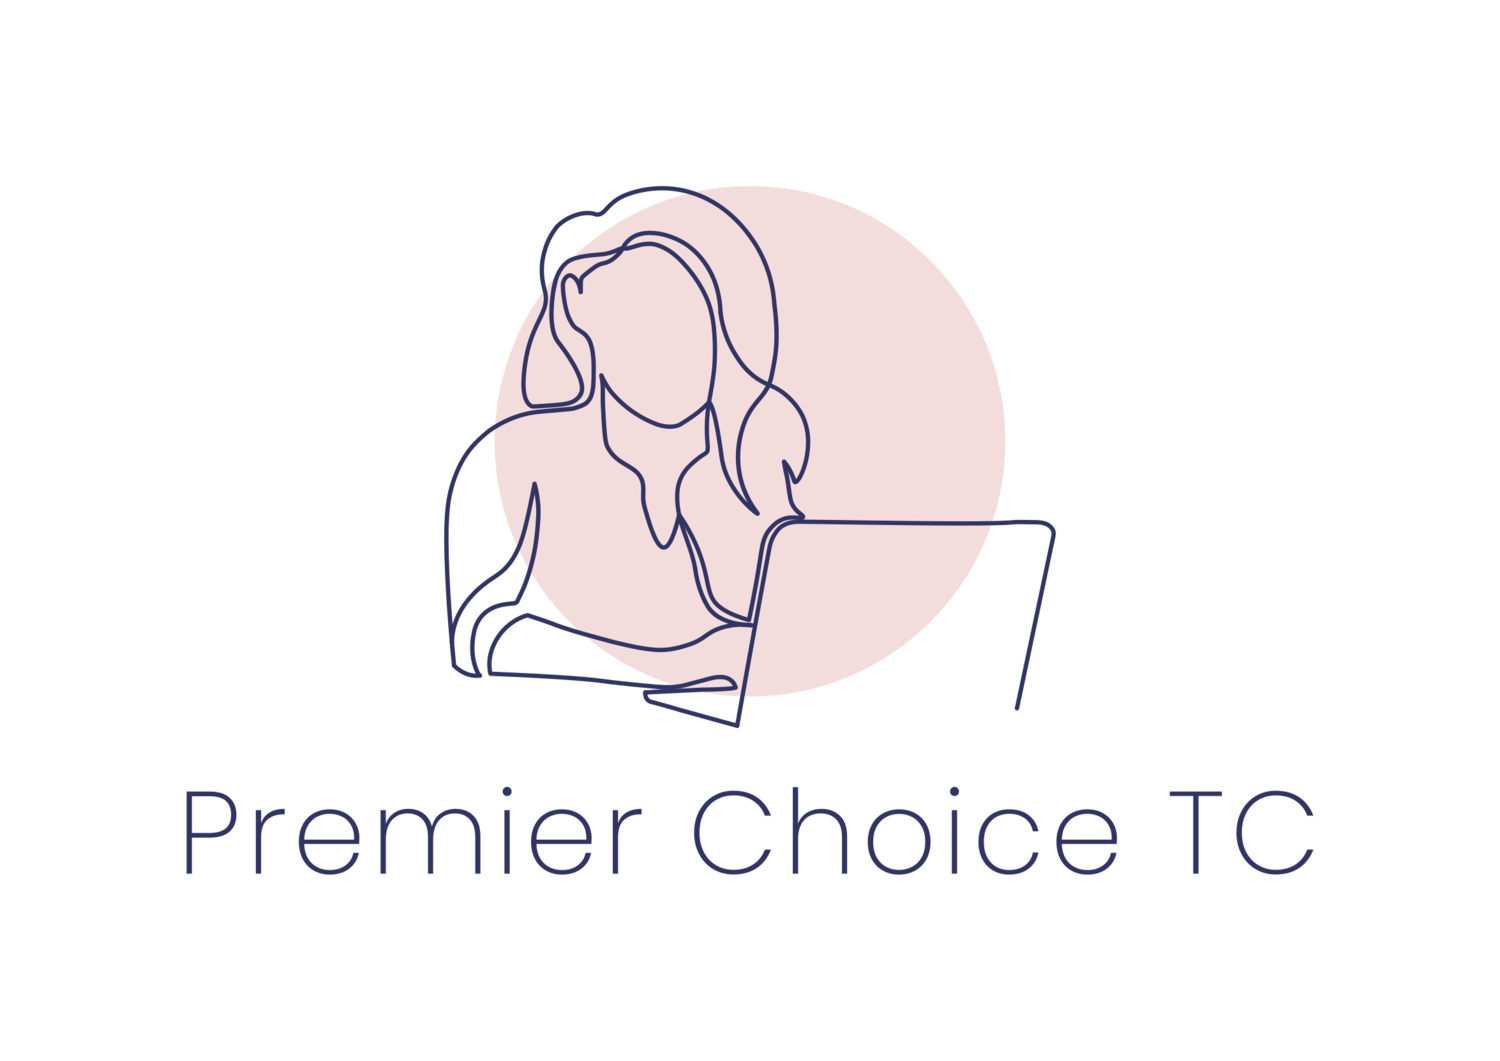 Premier Choice TC